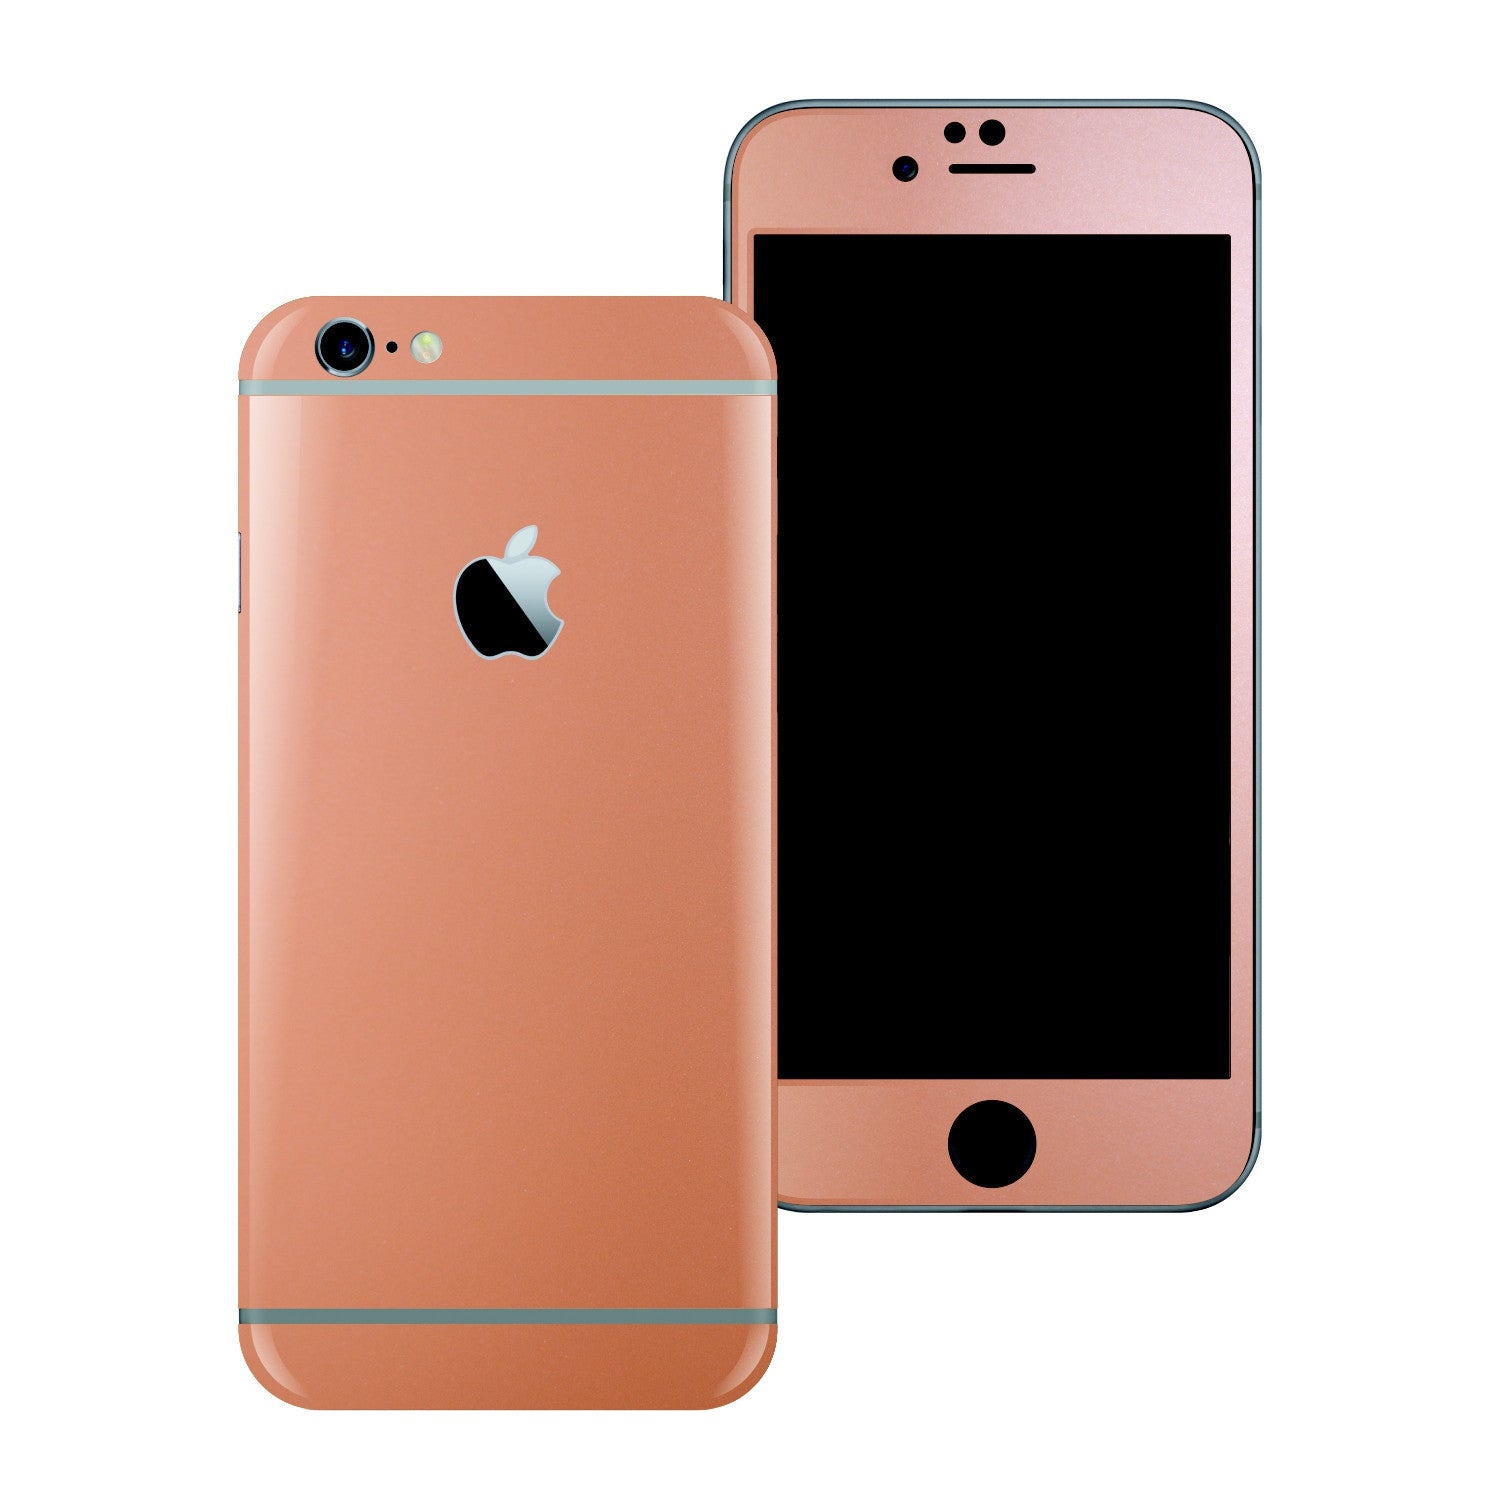 iPhone 6 Plus ROSE GOLD Matt Metallic Skin/Wrap/Decal ...